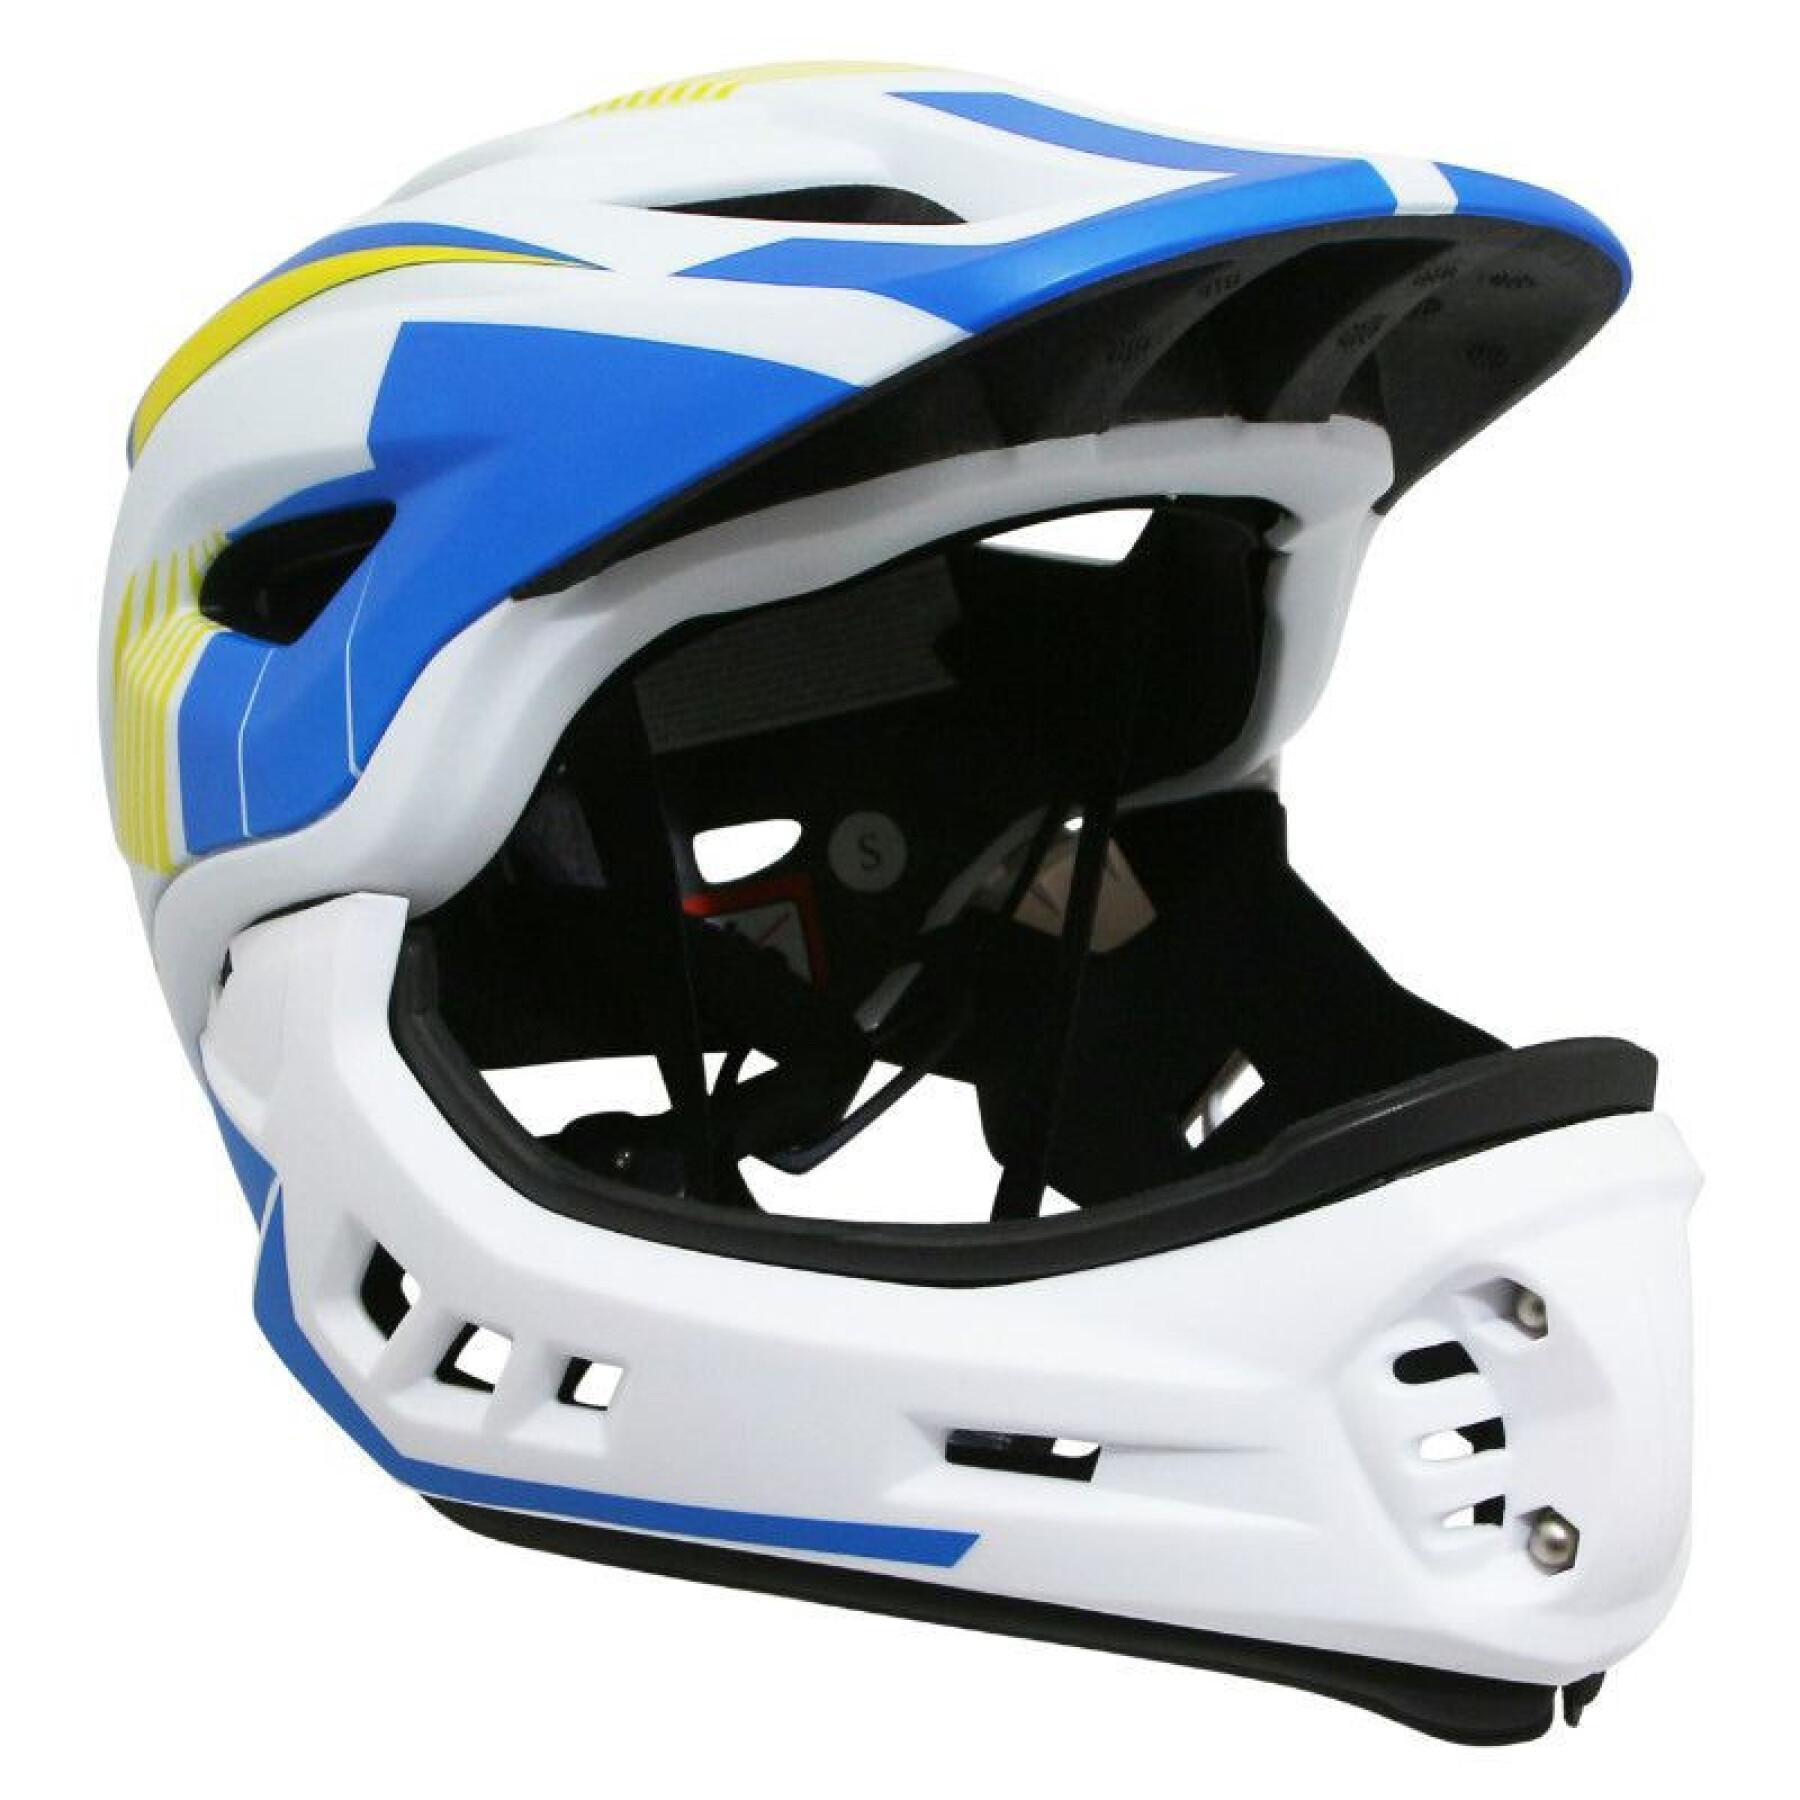 Full face helmet Kiddi Moto Ikon 53-58 cm